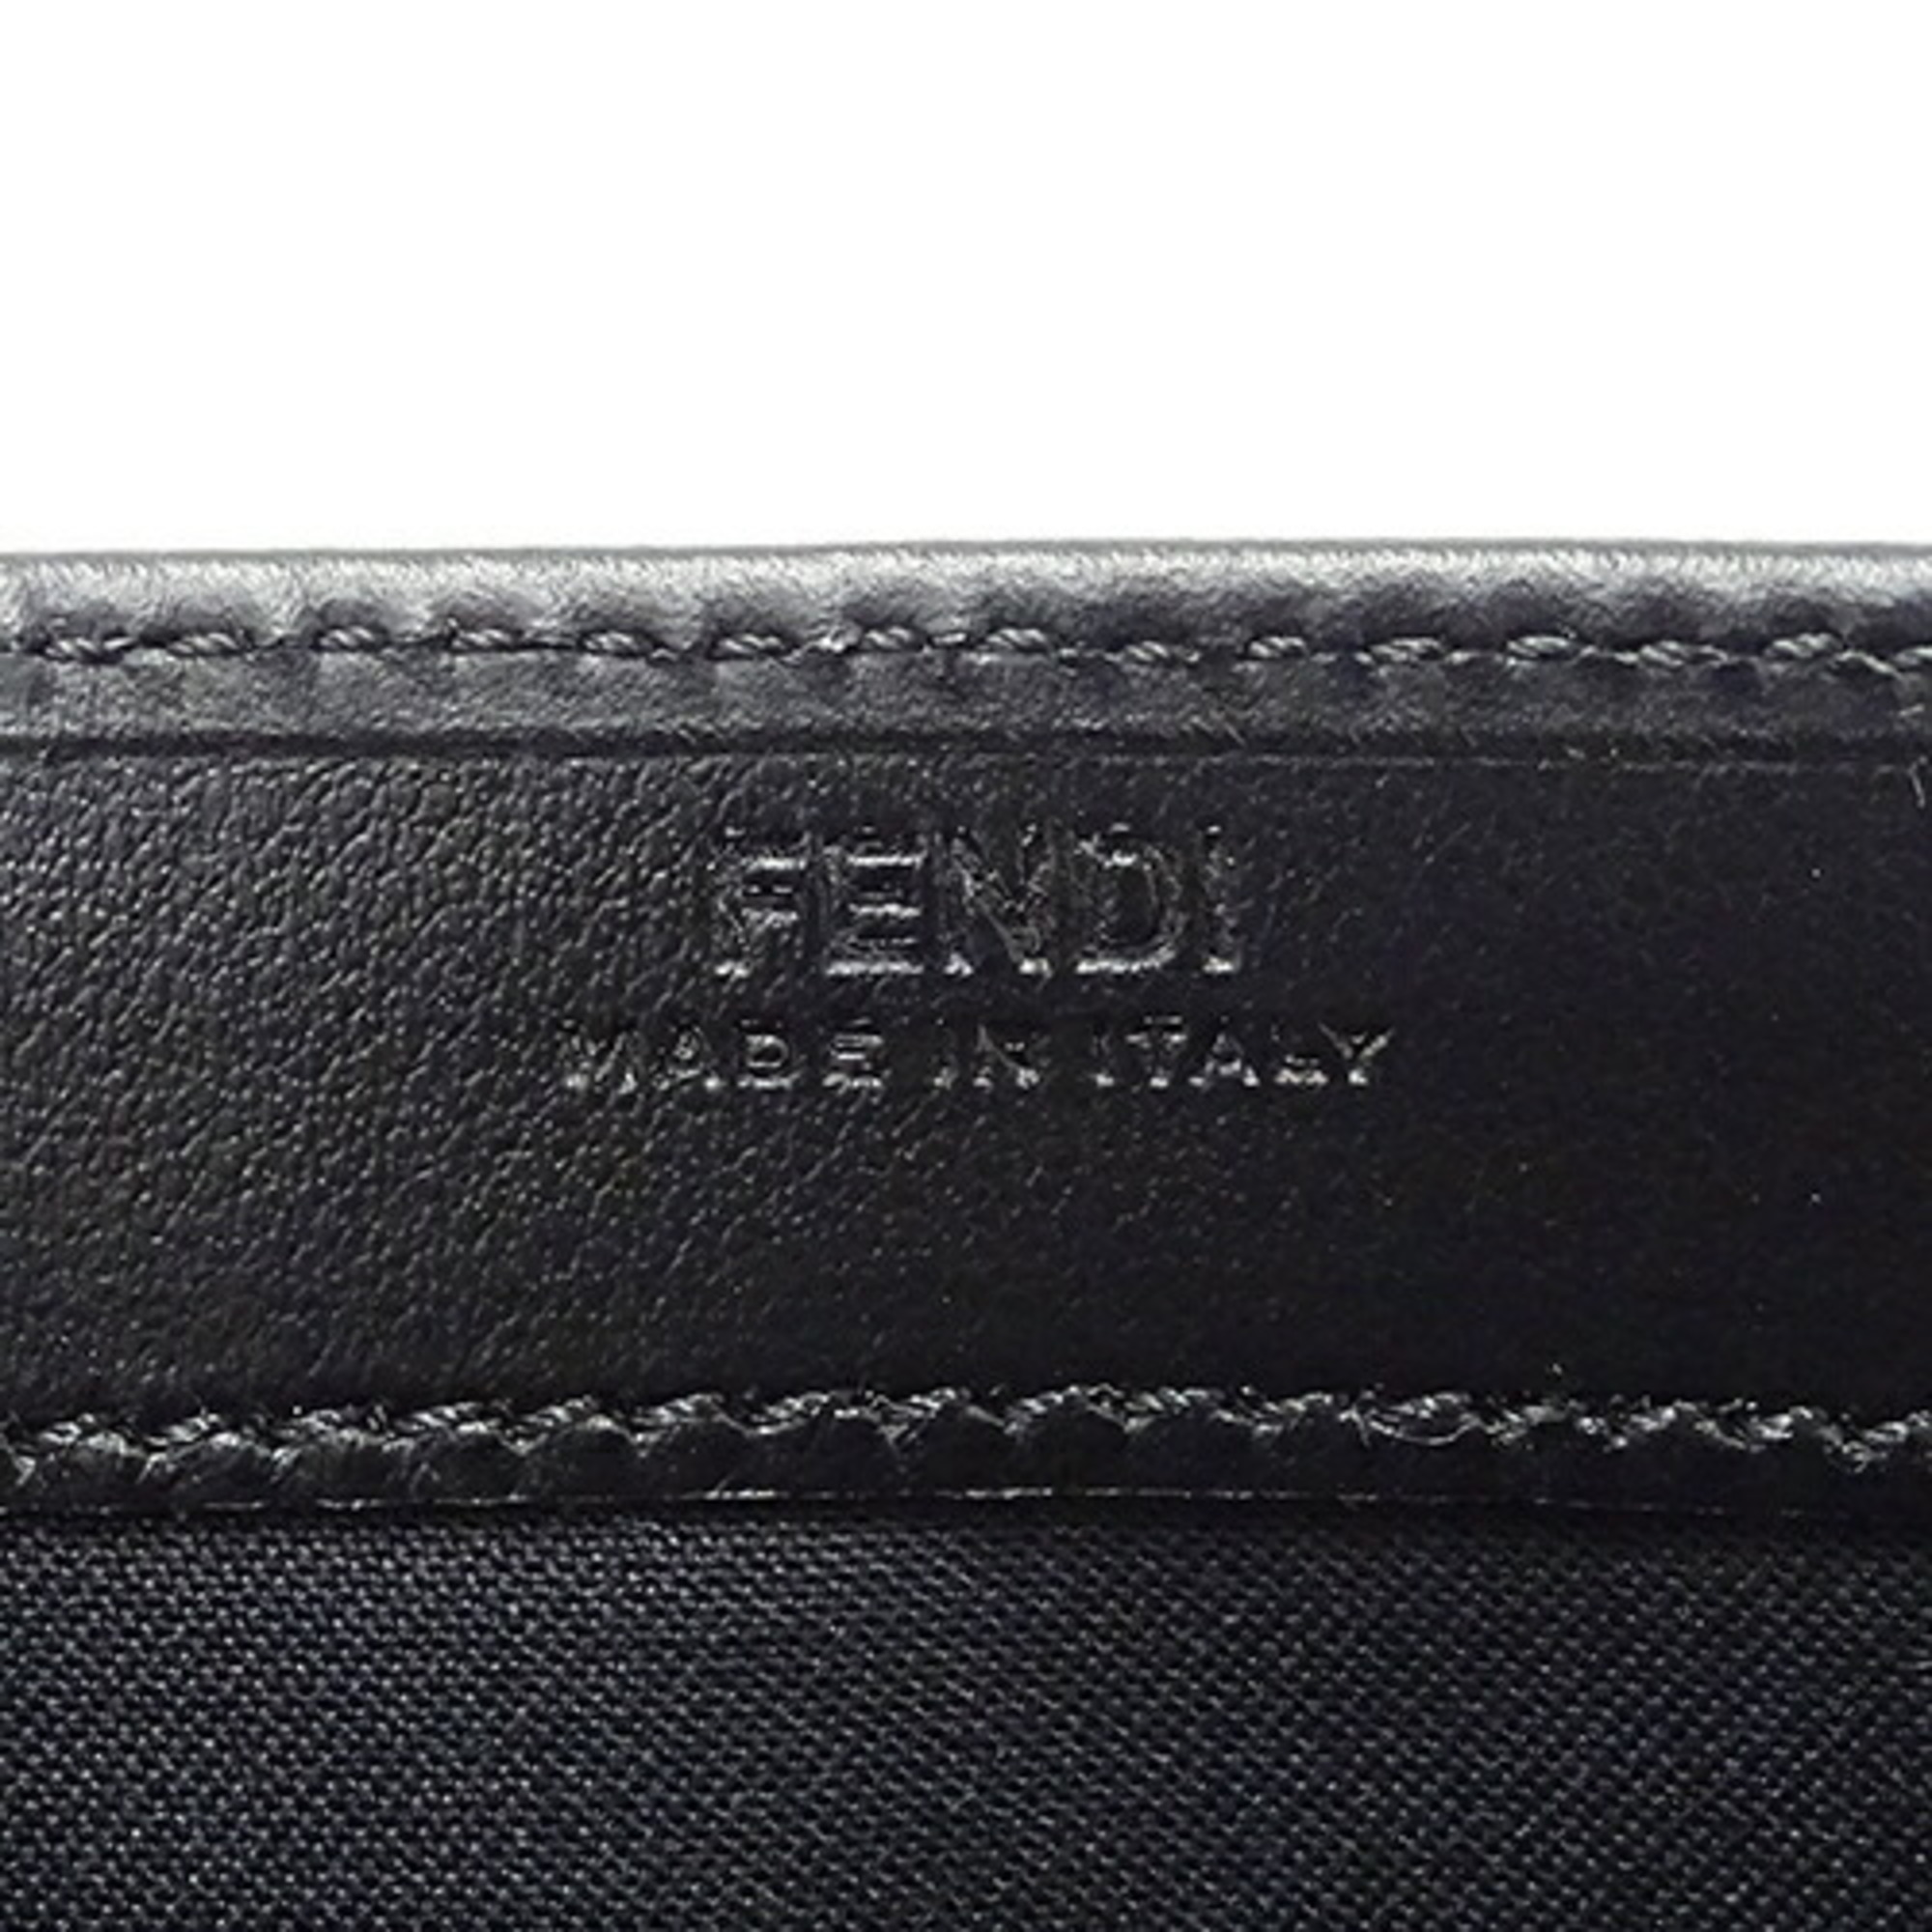 FENDI wallet for women and men, long wallet, leather, black, 8M0251, black embossed